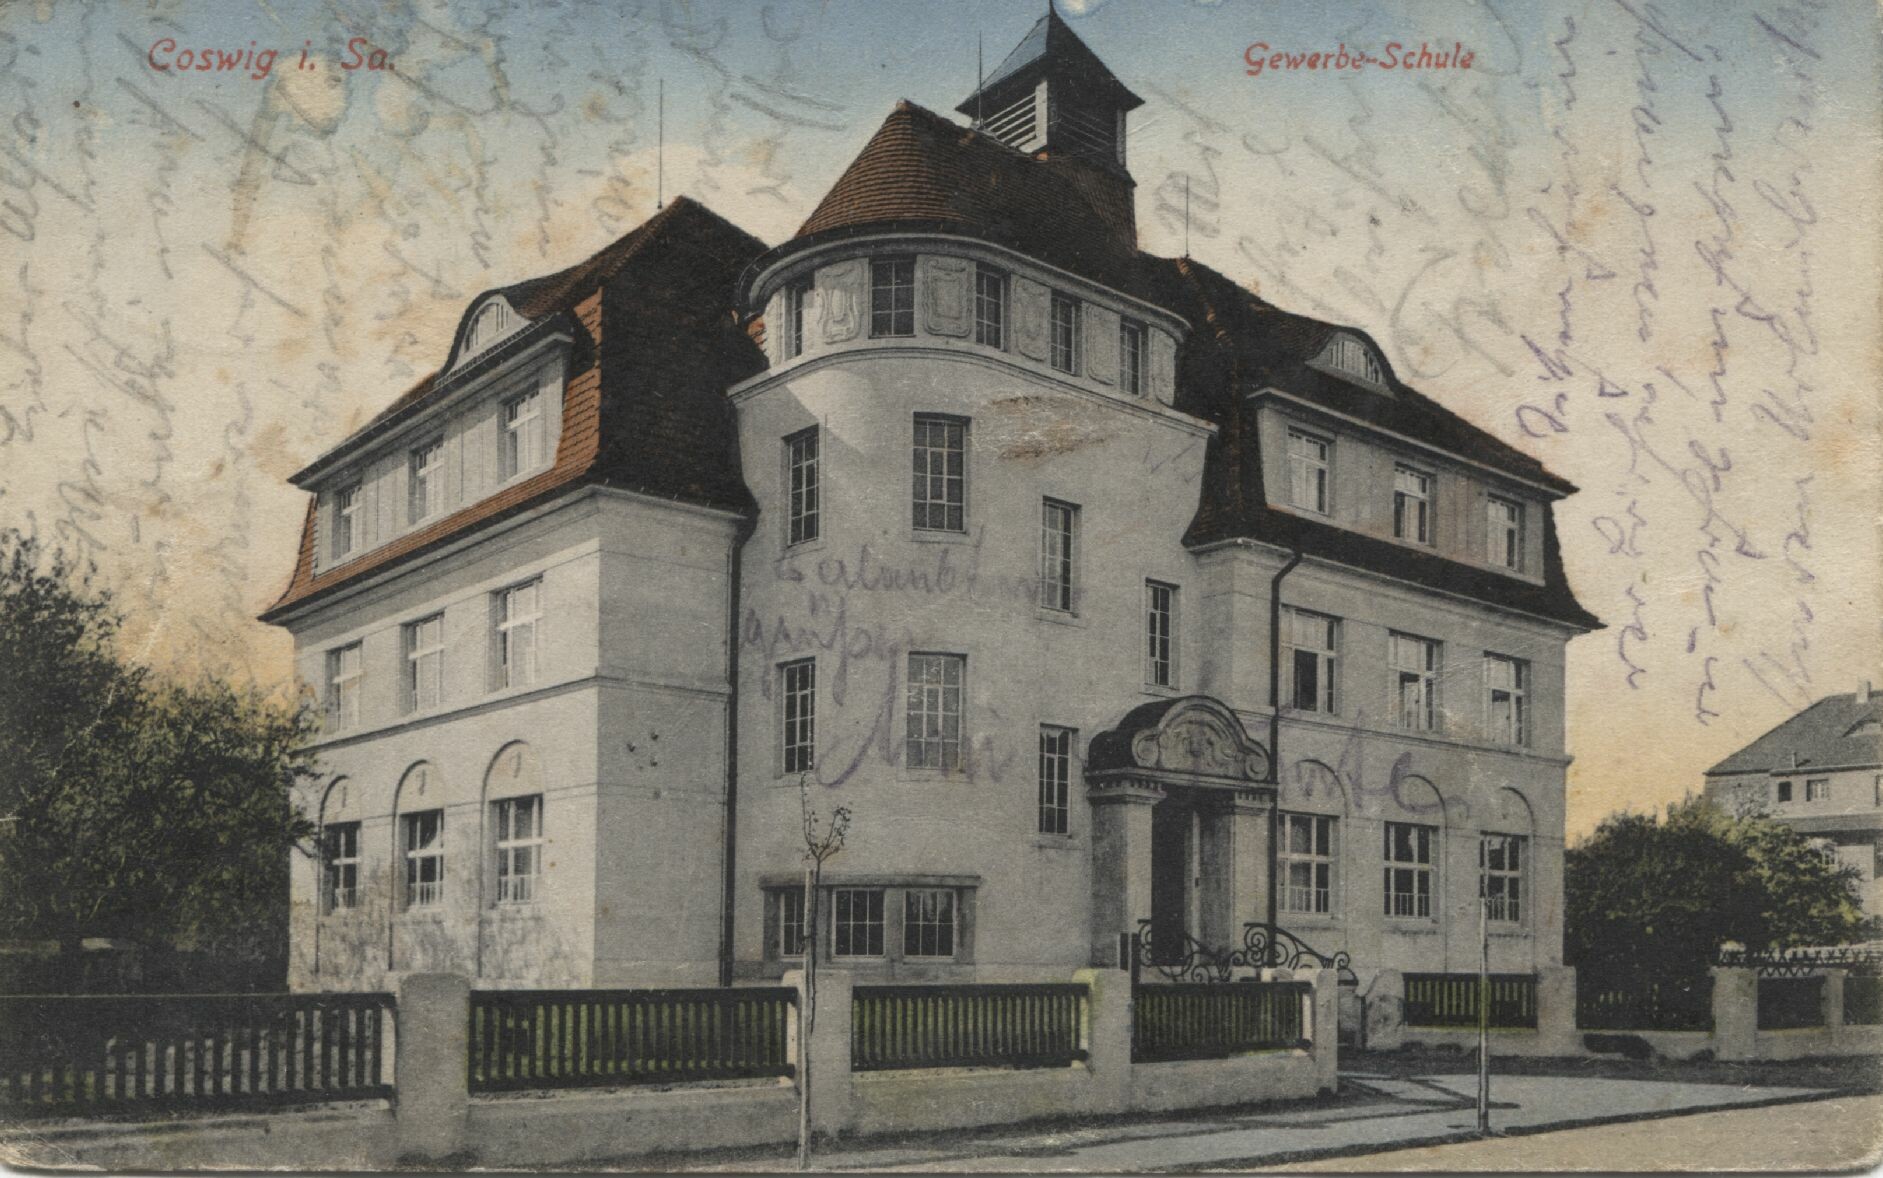 Postkarte: Coswig - Schulen (Gewerbeschule) (Karrasburg Museum Coswig CC BY-NC-SA)